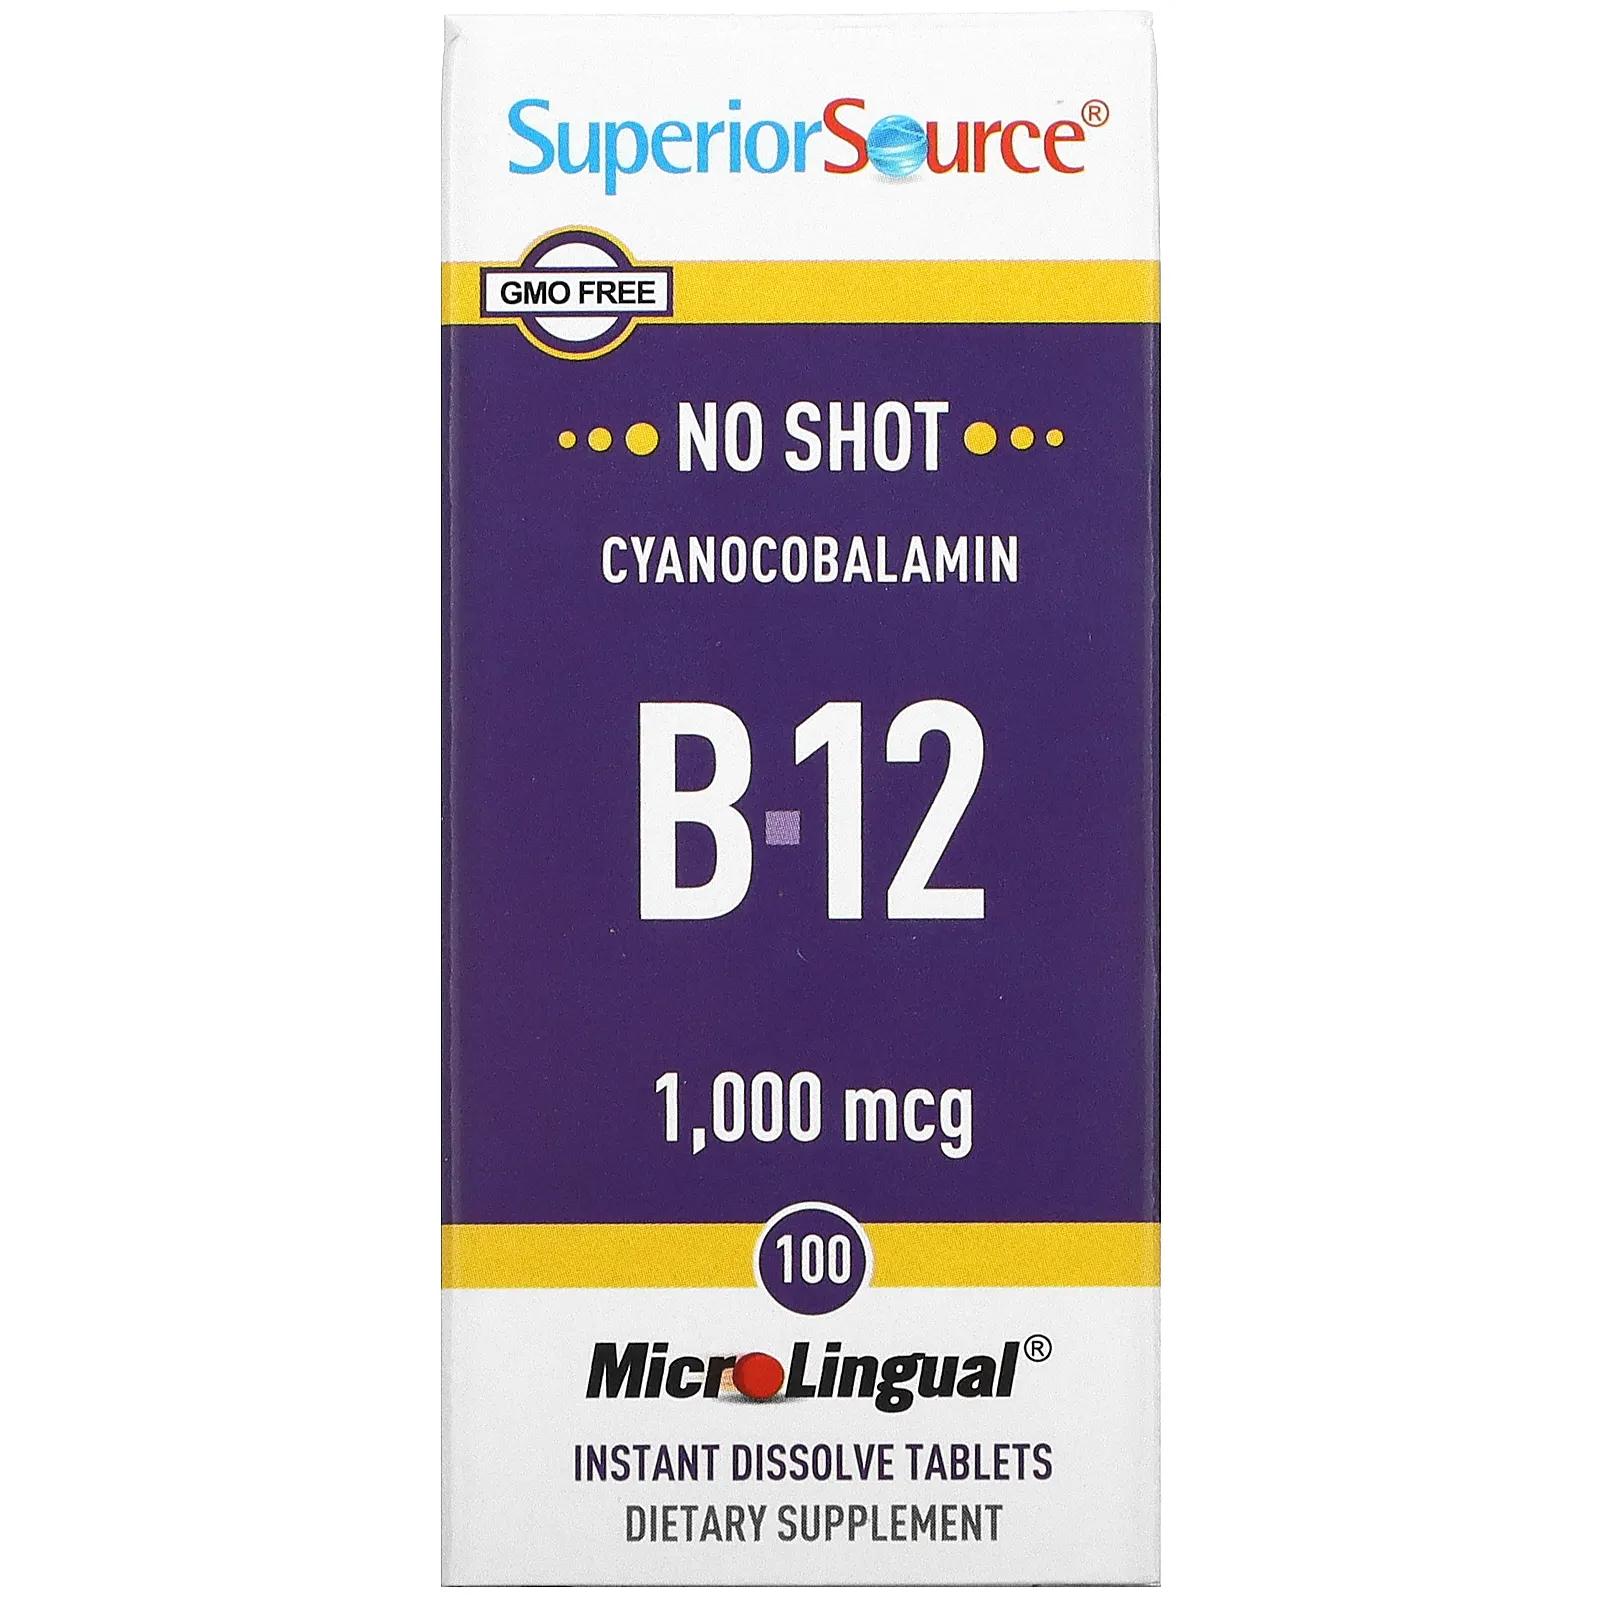 Superior Source MicroLingual цианокобаламин B12 1000 мкг 100 таблеток цианокобаламин b 12 superior source 1000 мкг 100 таблеток